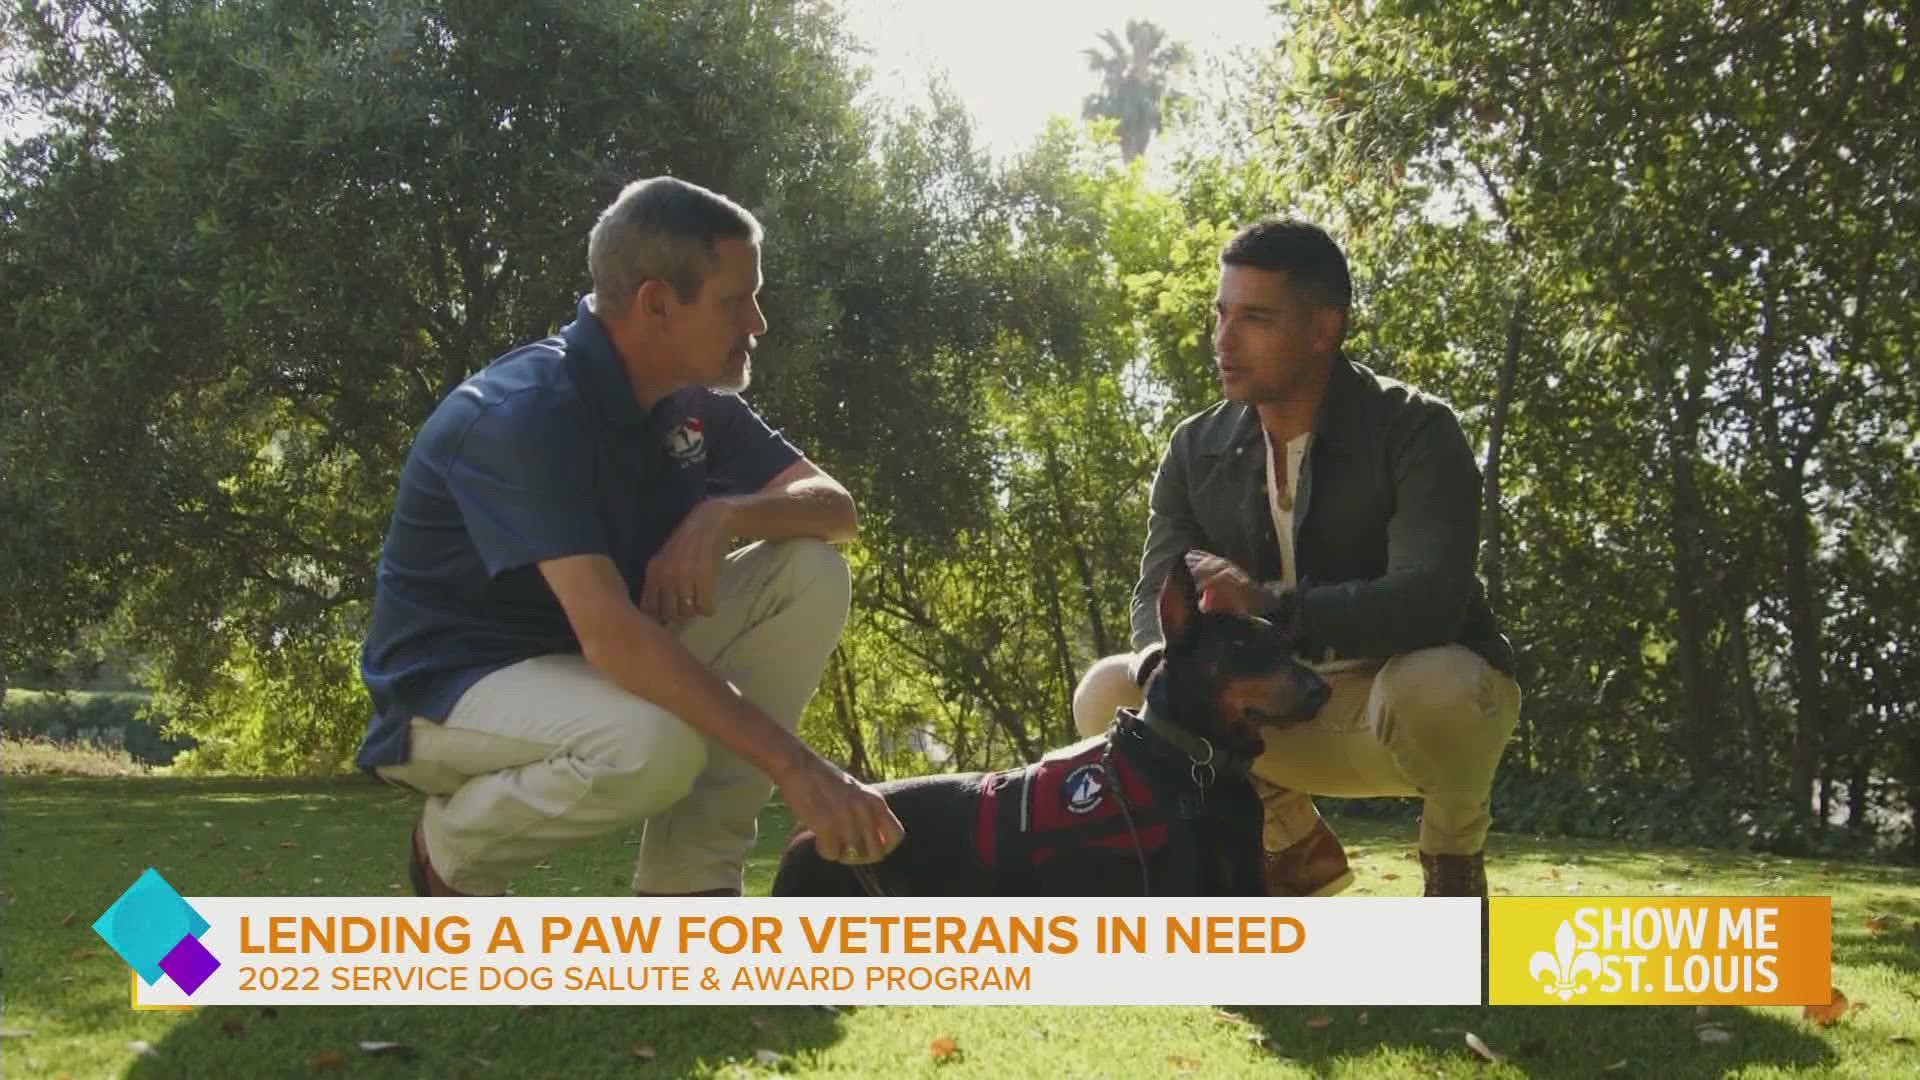 Lending a paw for veterans in need 2022 Service Dog Salute & award program